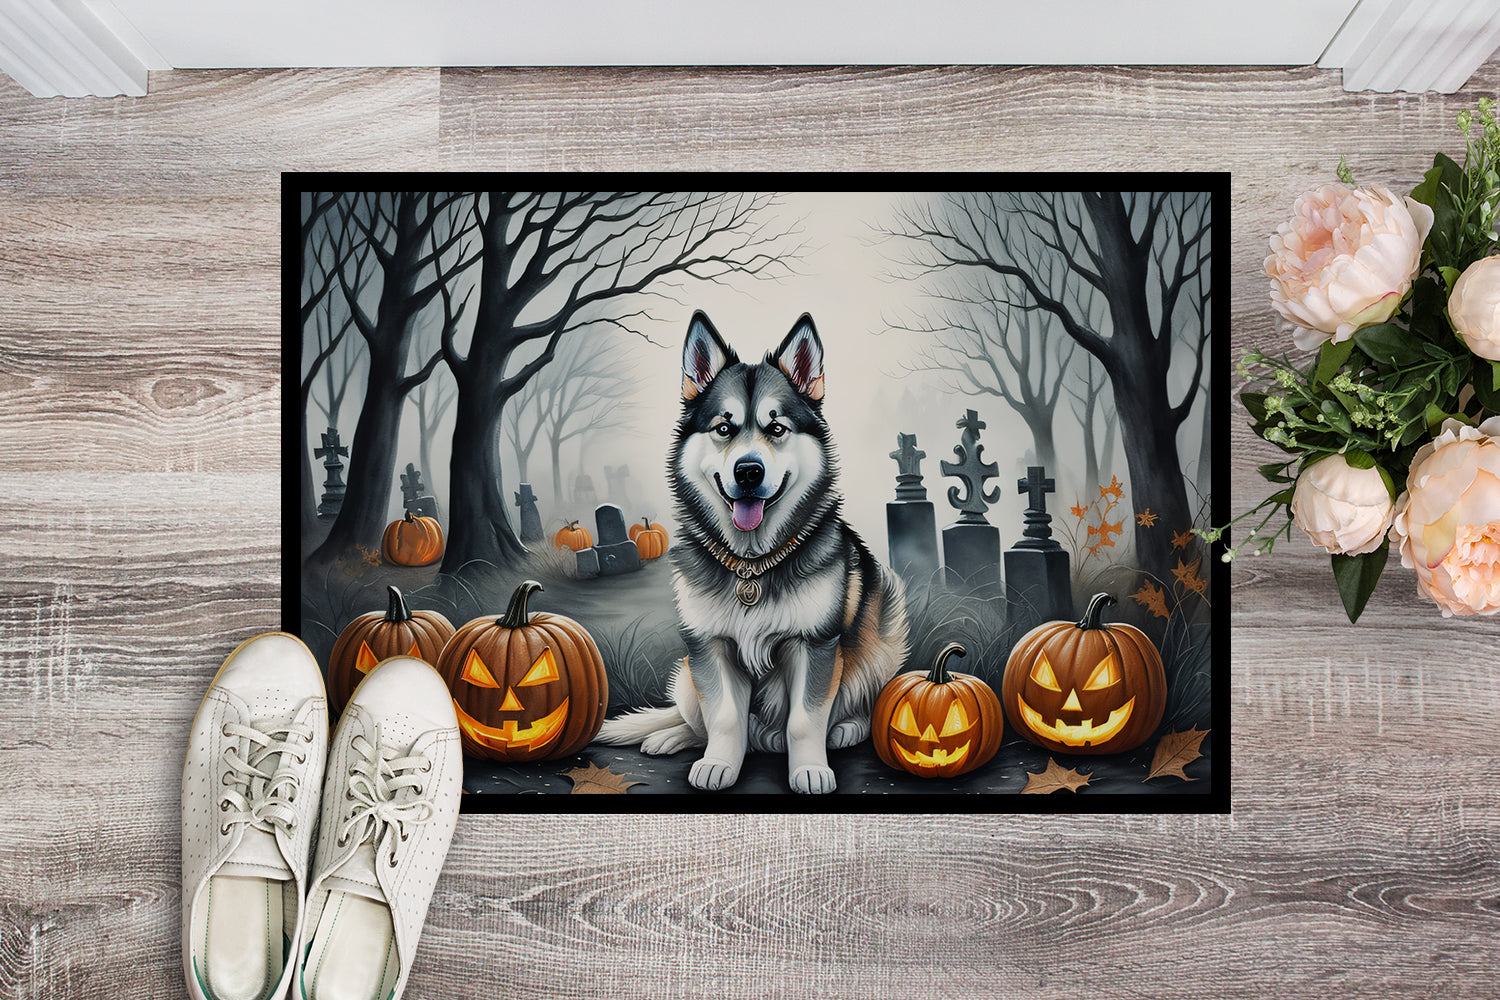 Buy this Alaskan Malamute Spooky Halloween Doormat 18x27